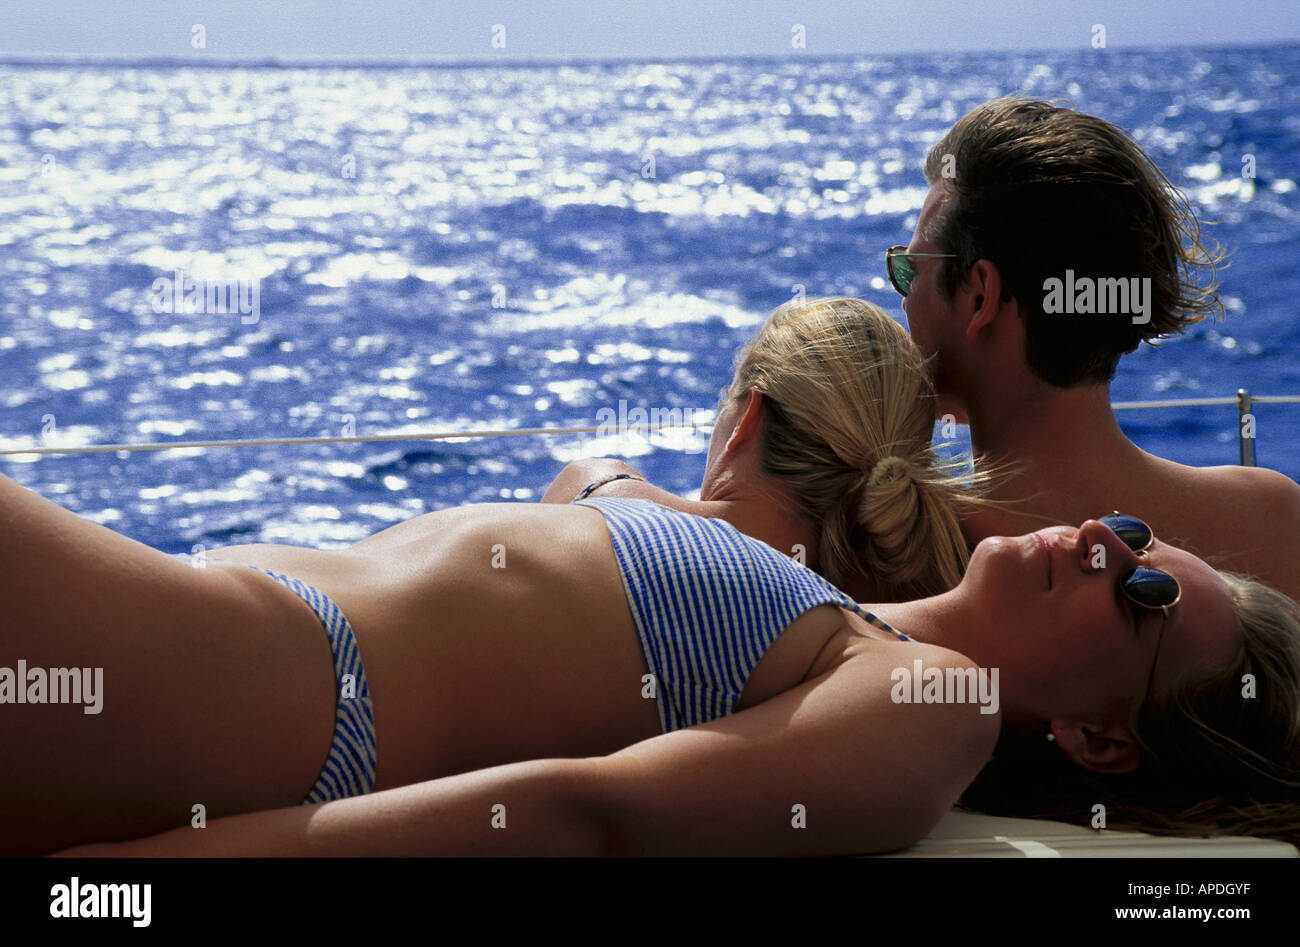 Sunbathing on boat, Caribbean Sea Stock Photo